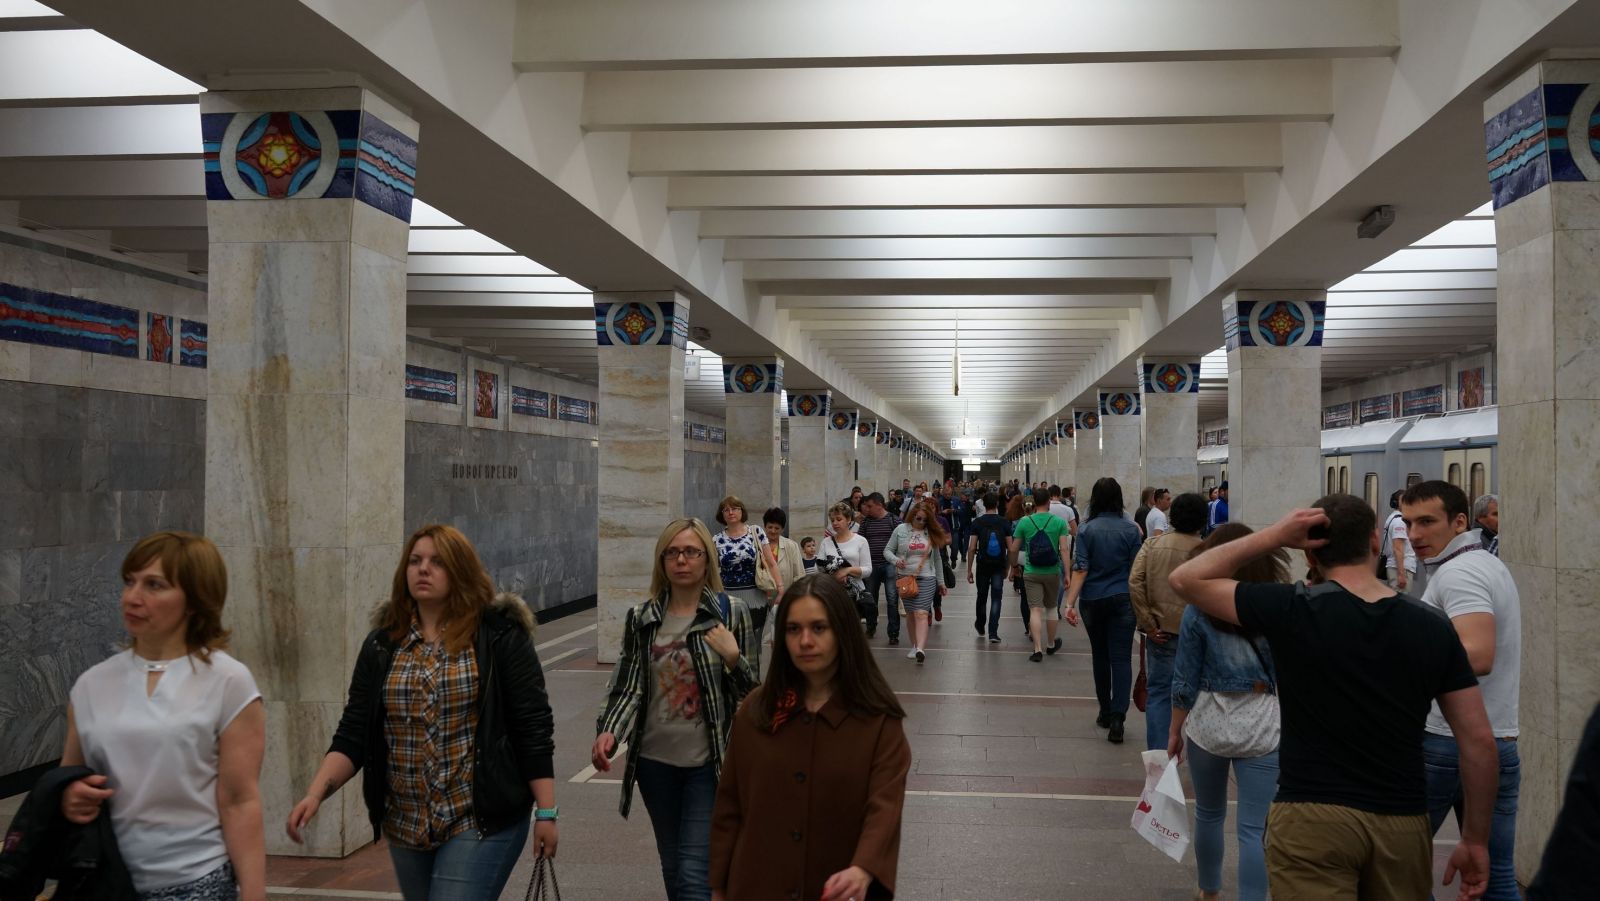 Станция метро новогиреево